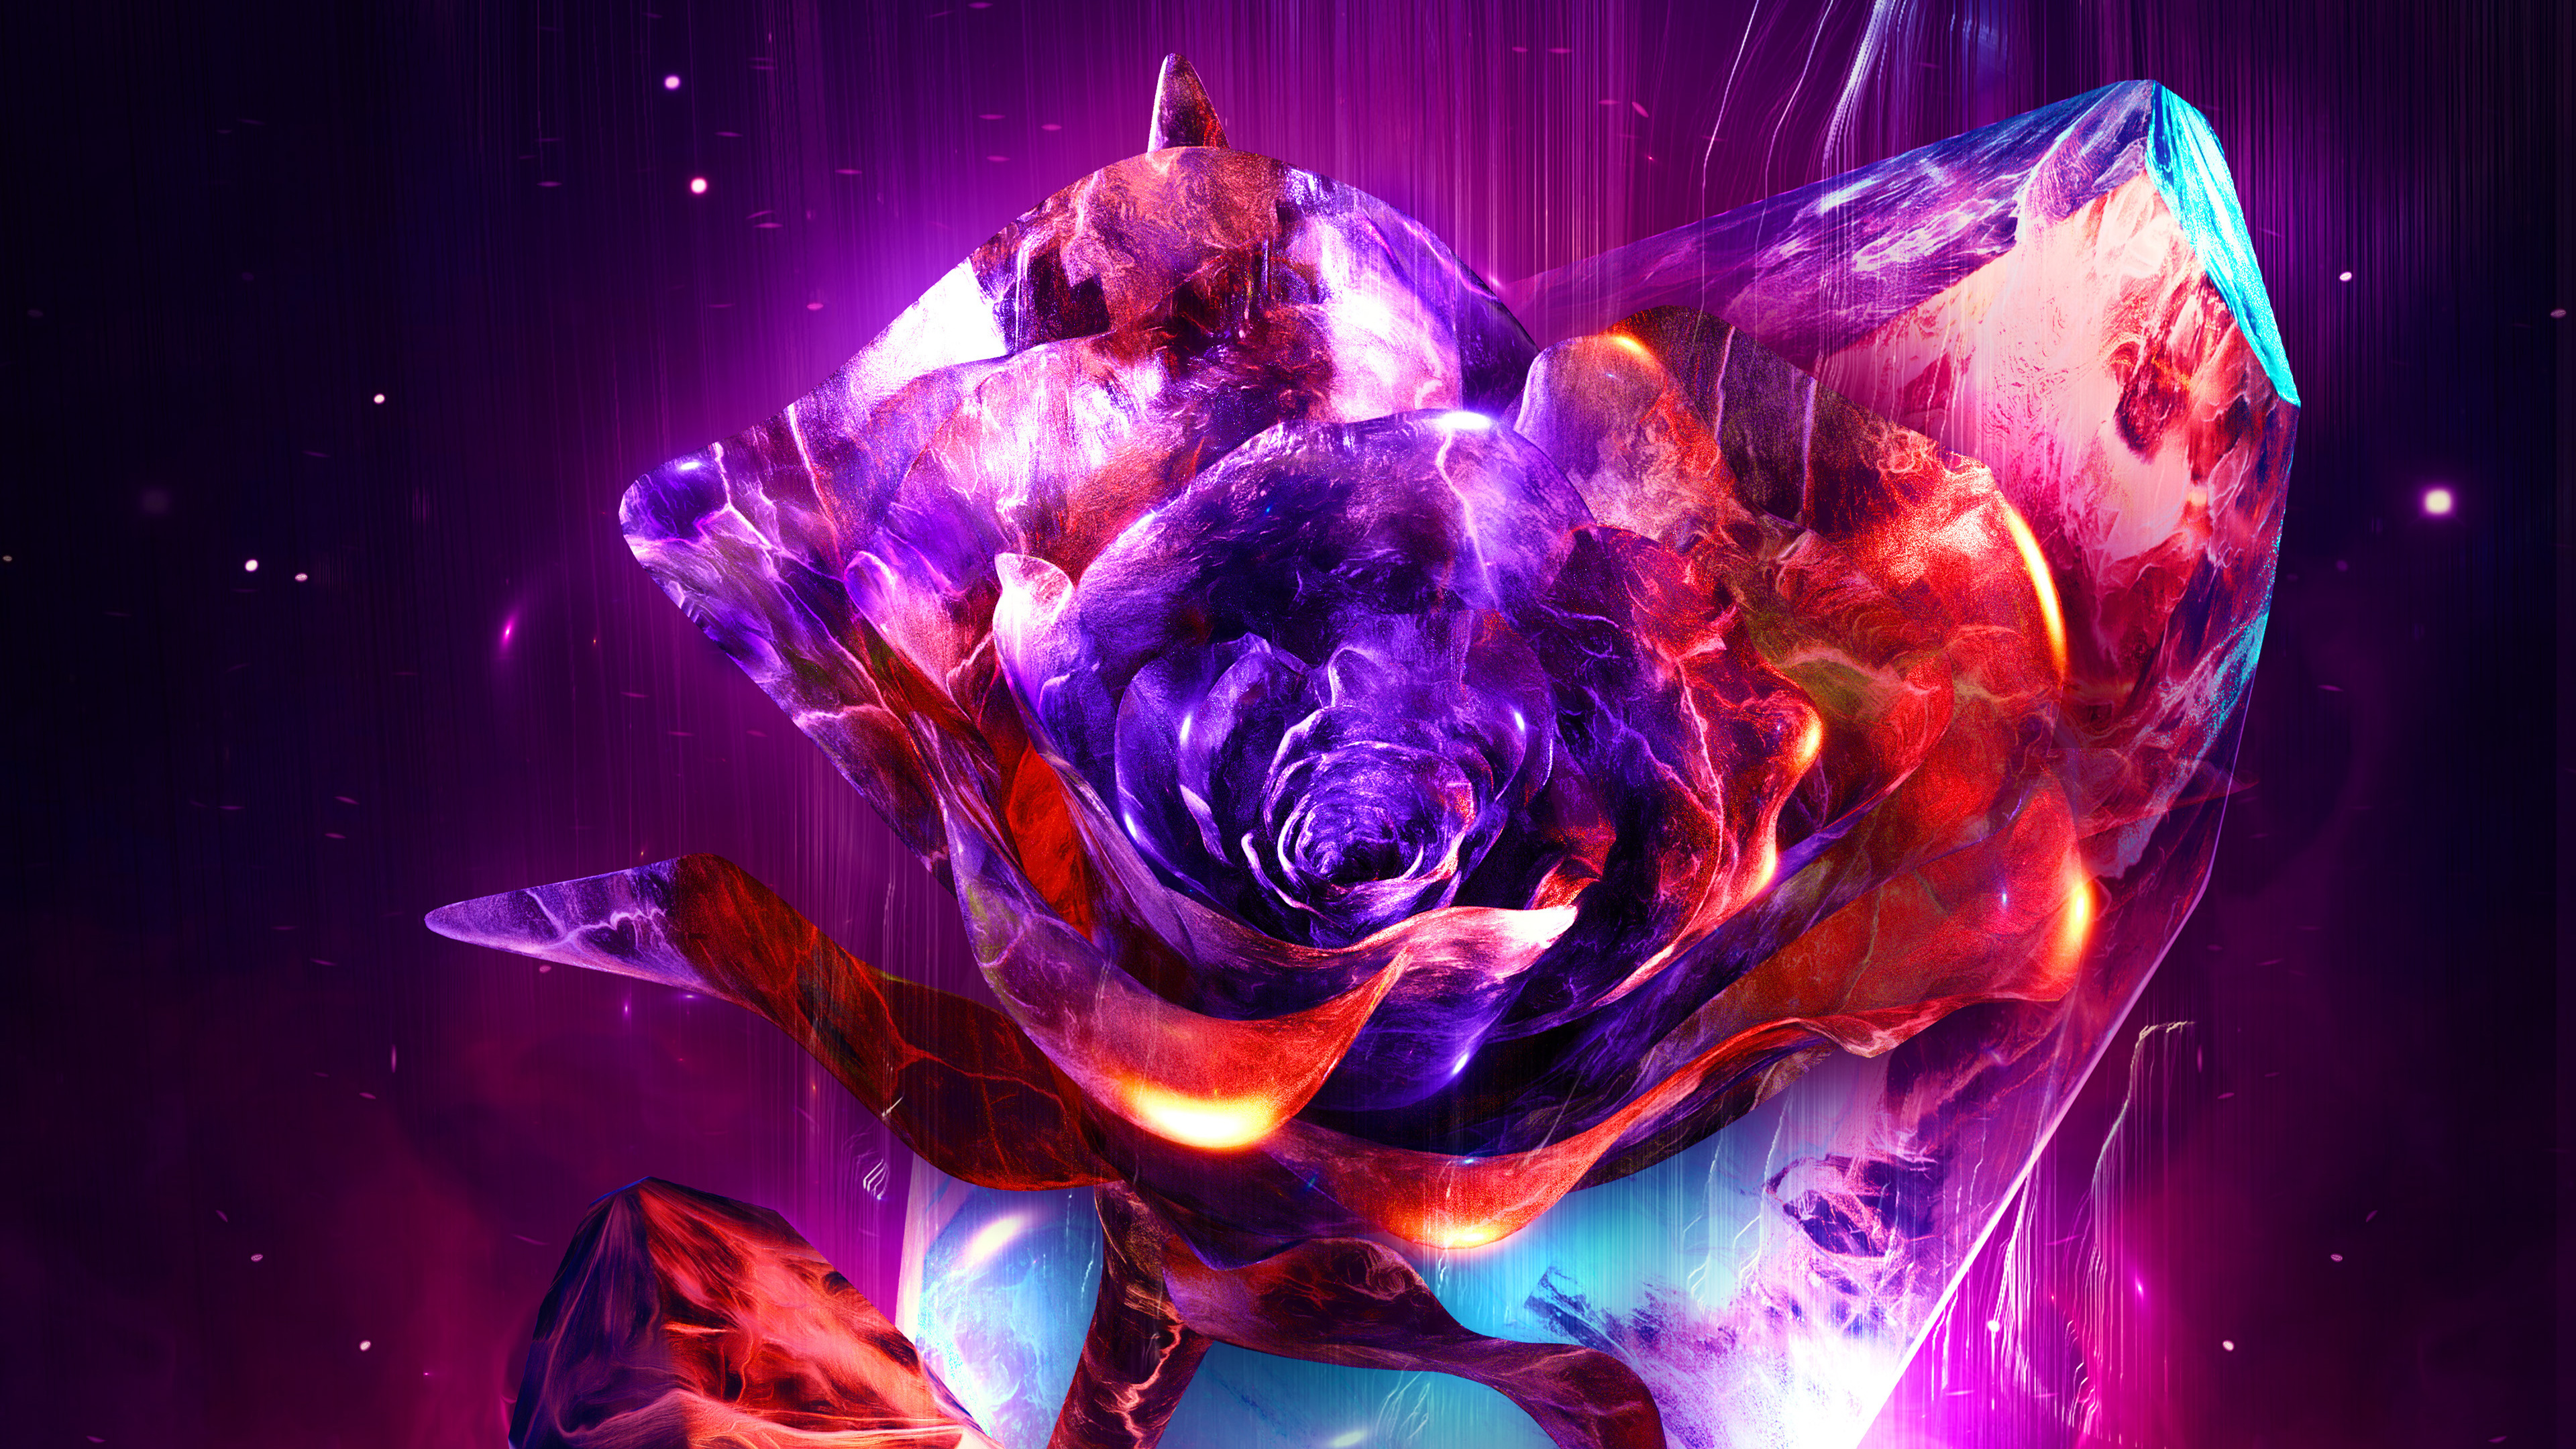 rose wallpaper hd,púrpura,violeta,rosado,rosa,arte fractal